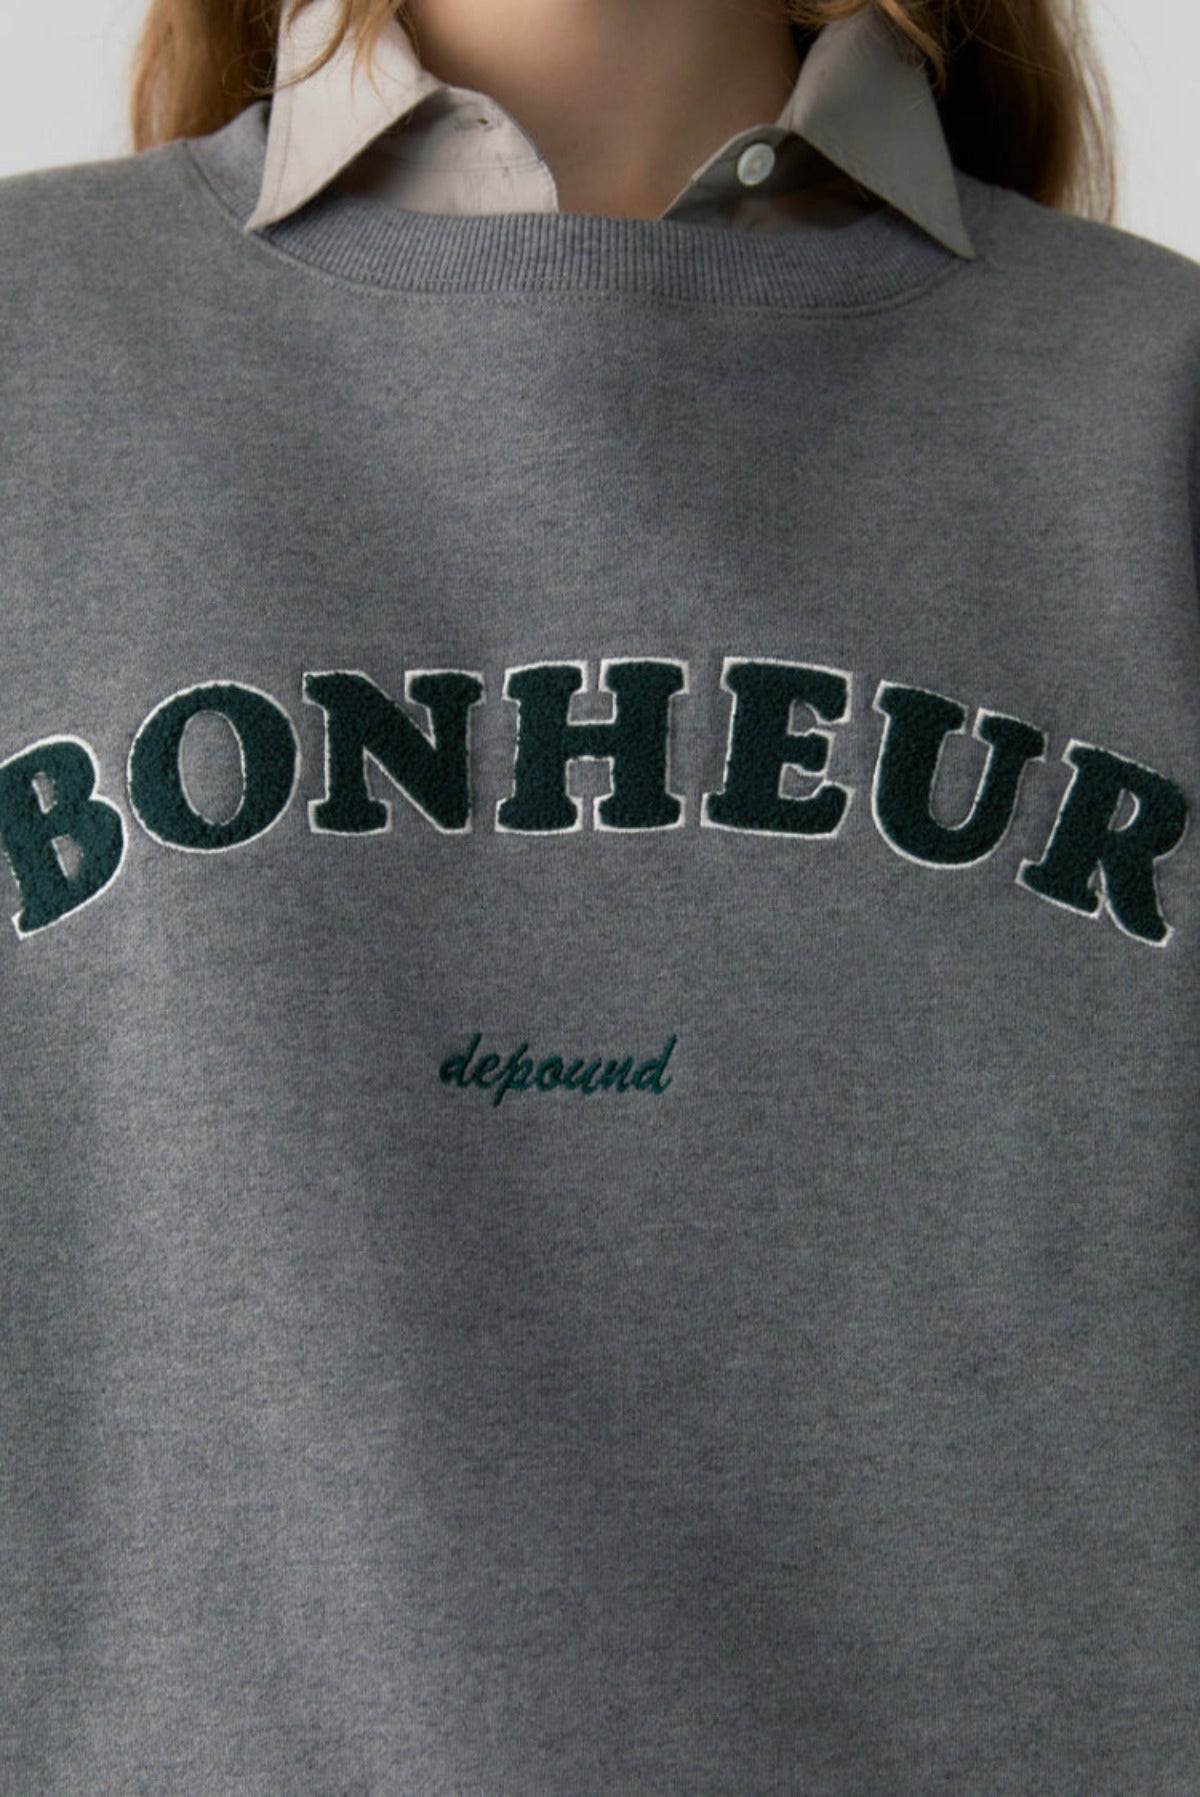 Bonheur Boucle Embroidery Sweatshirt In Gray